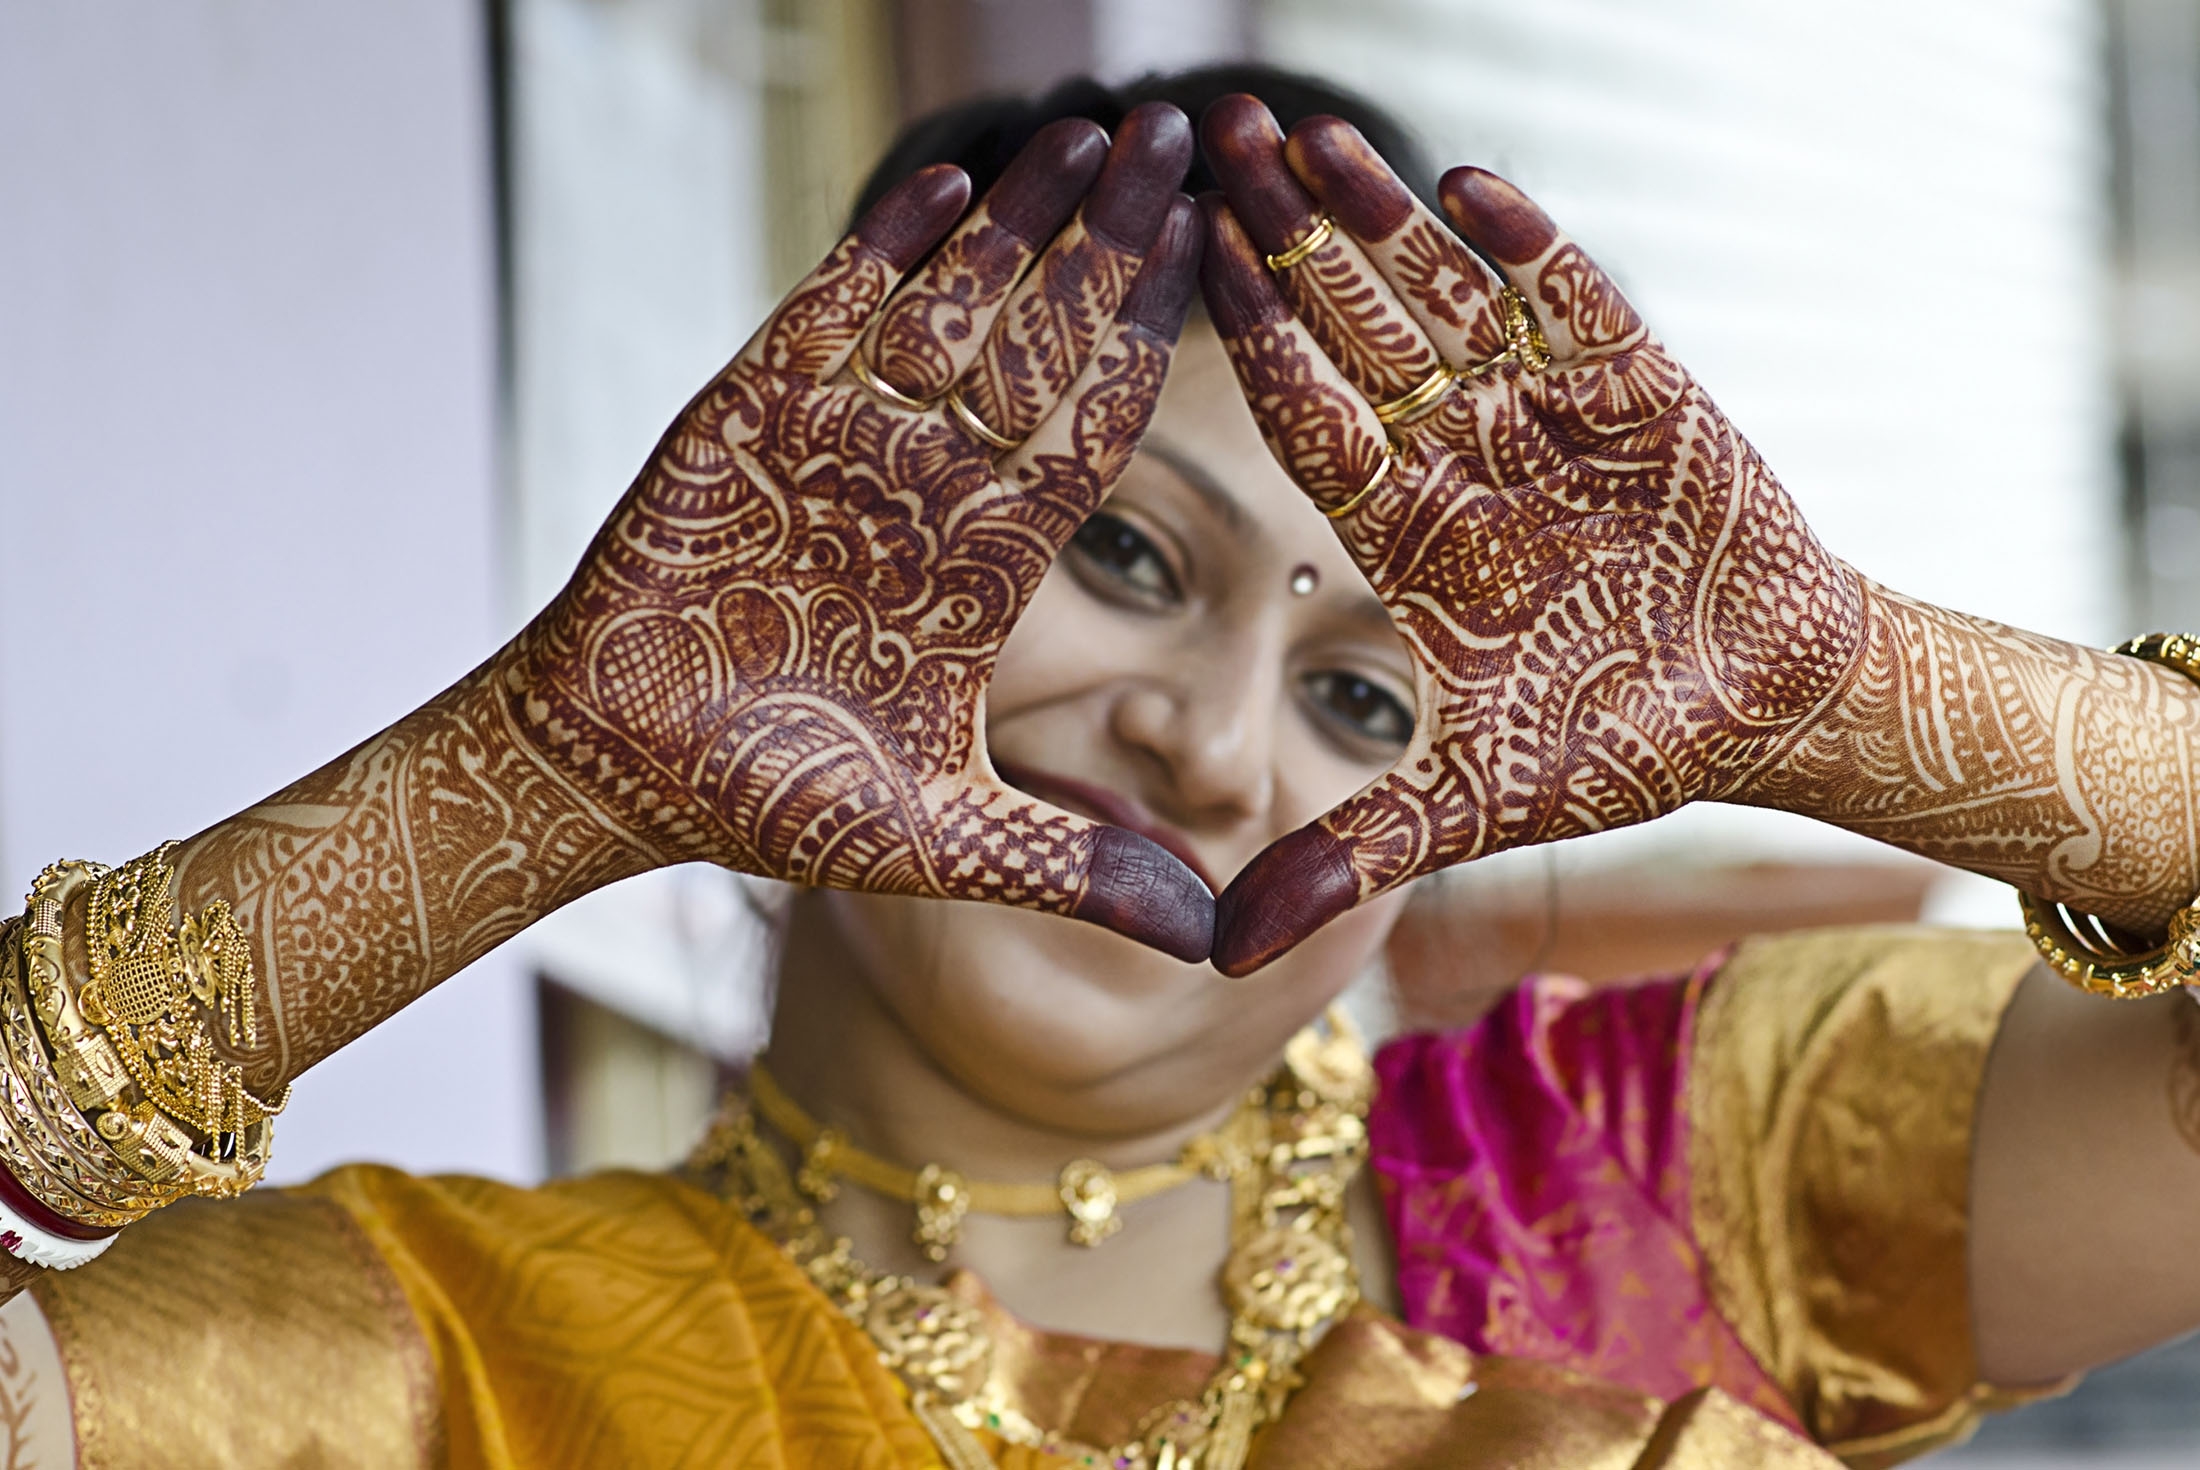 Bengali Woman with beautiful mehendi design on hand